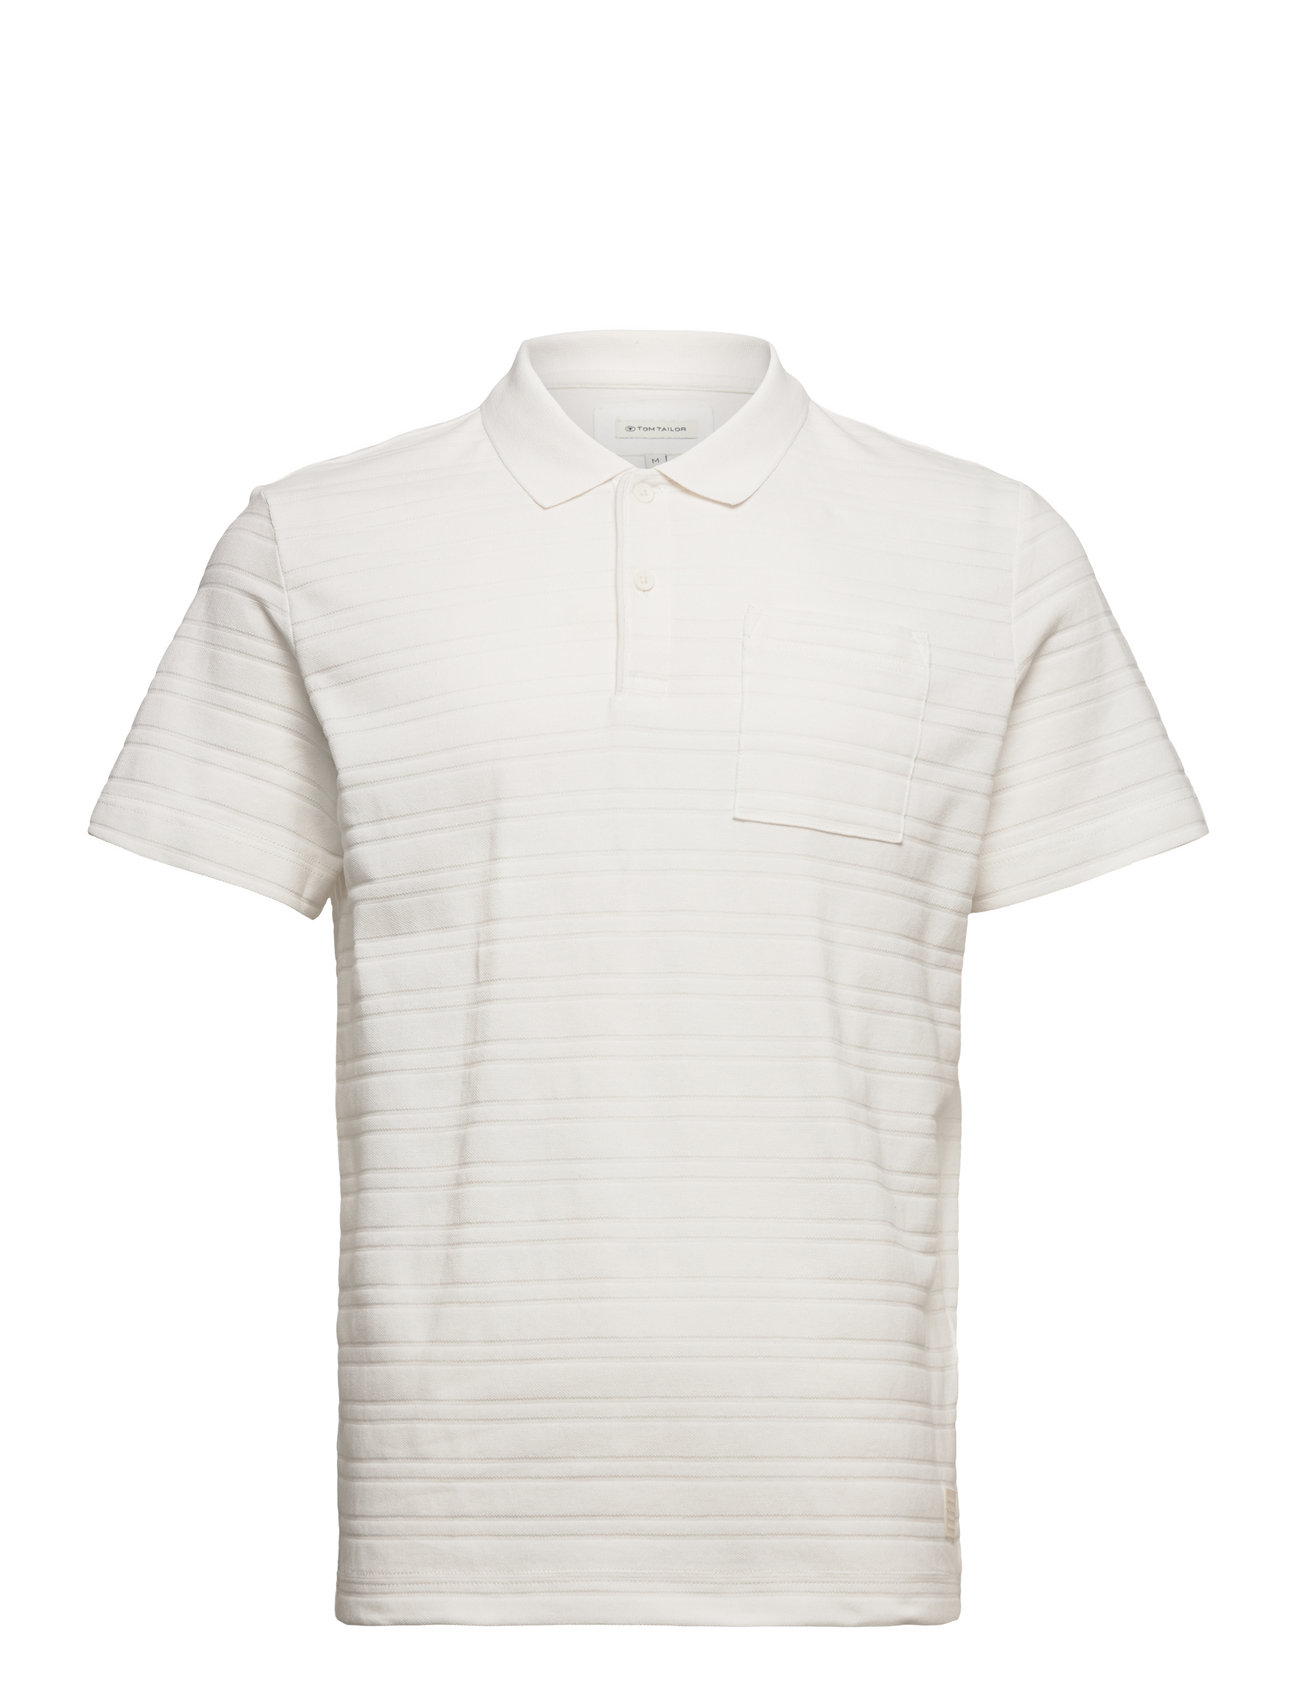 Polo Structured - Tom Polo Tailor Piqué Shirts